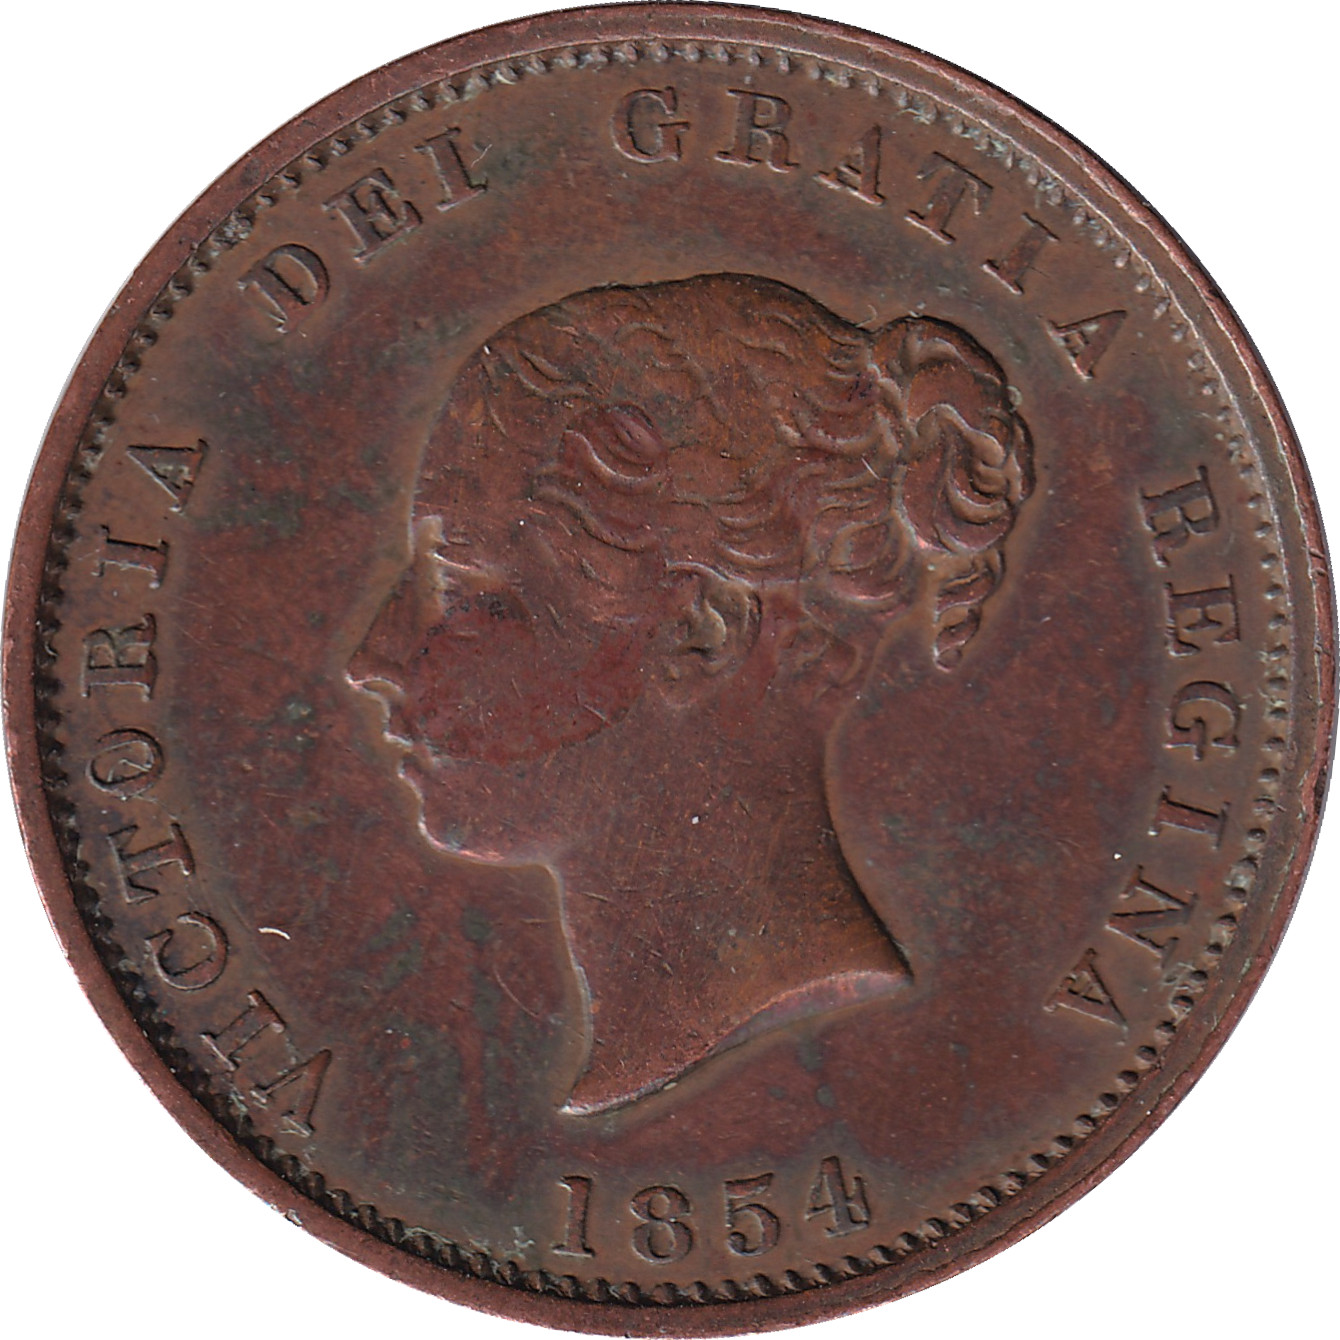 1/2 penny - Victoria - Mature head